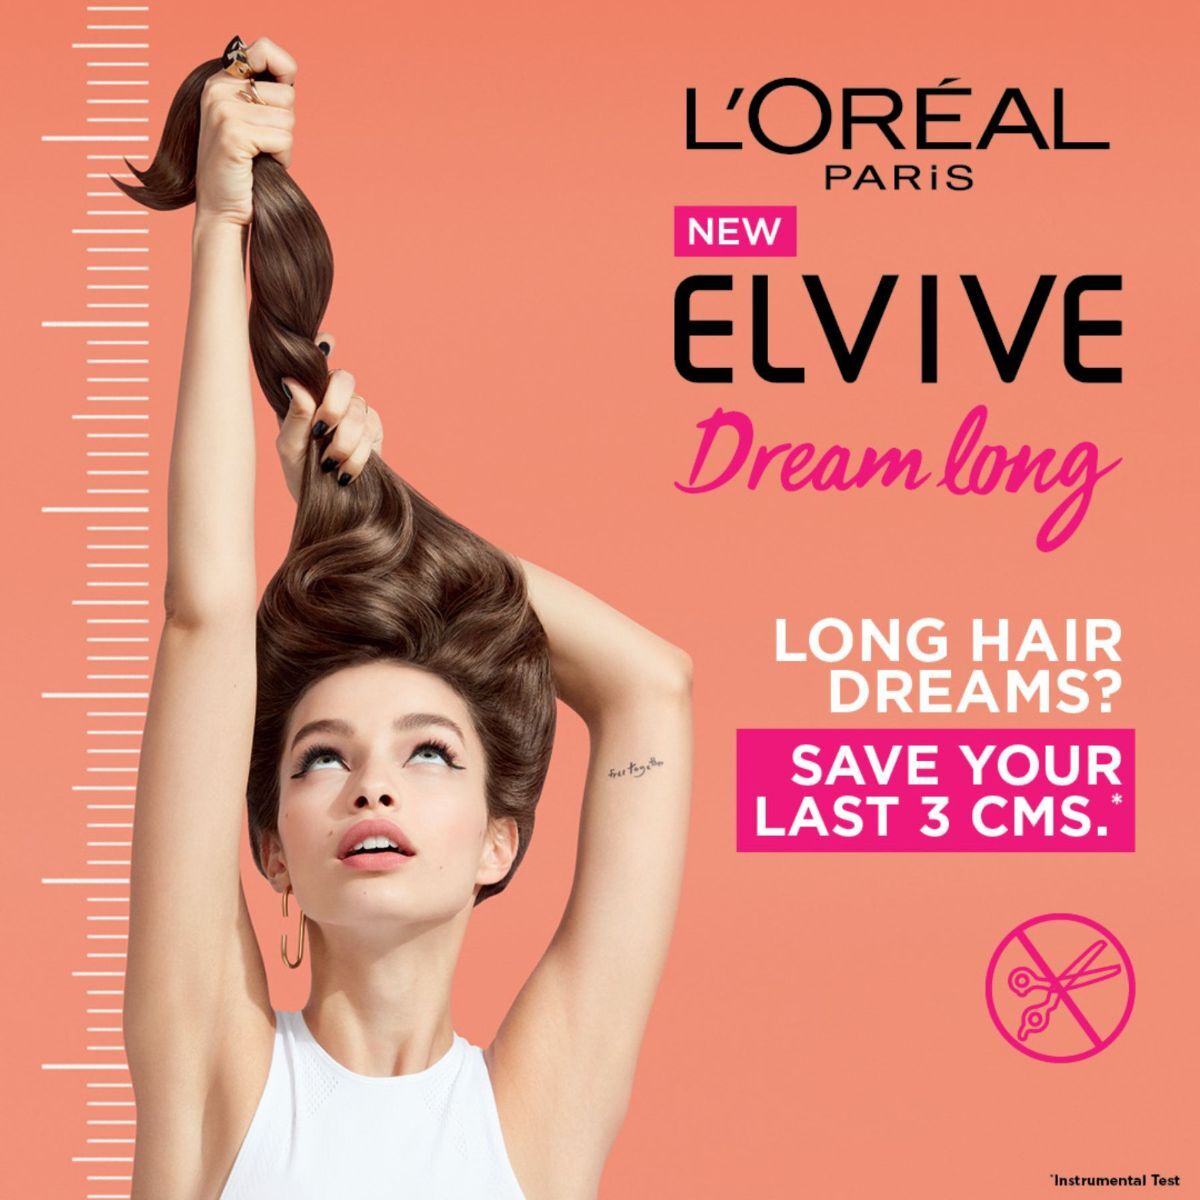 L'Oreal Elvive Dream Long Reinforcing Shampoo 400 ml